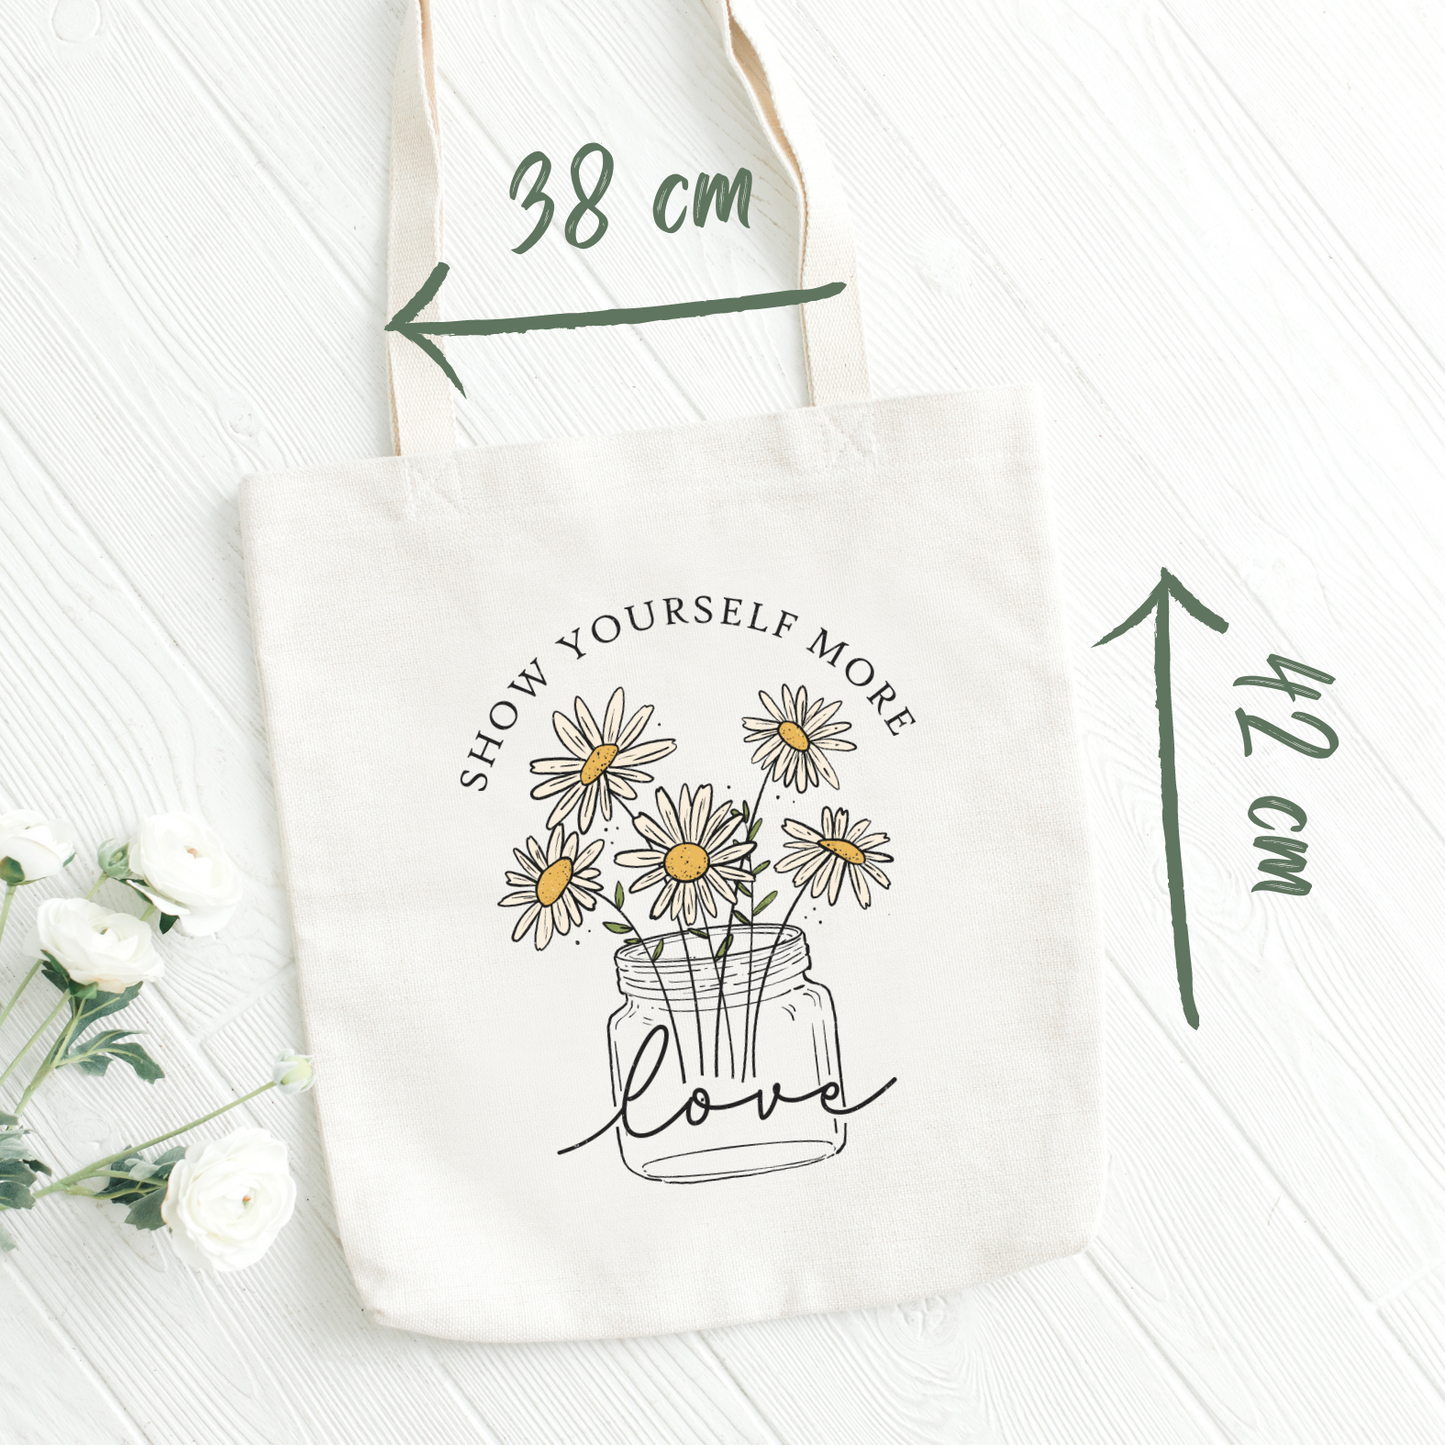 Shopping bag aesthetic 100% cotone naturale | Mod. Flower 3